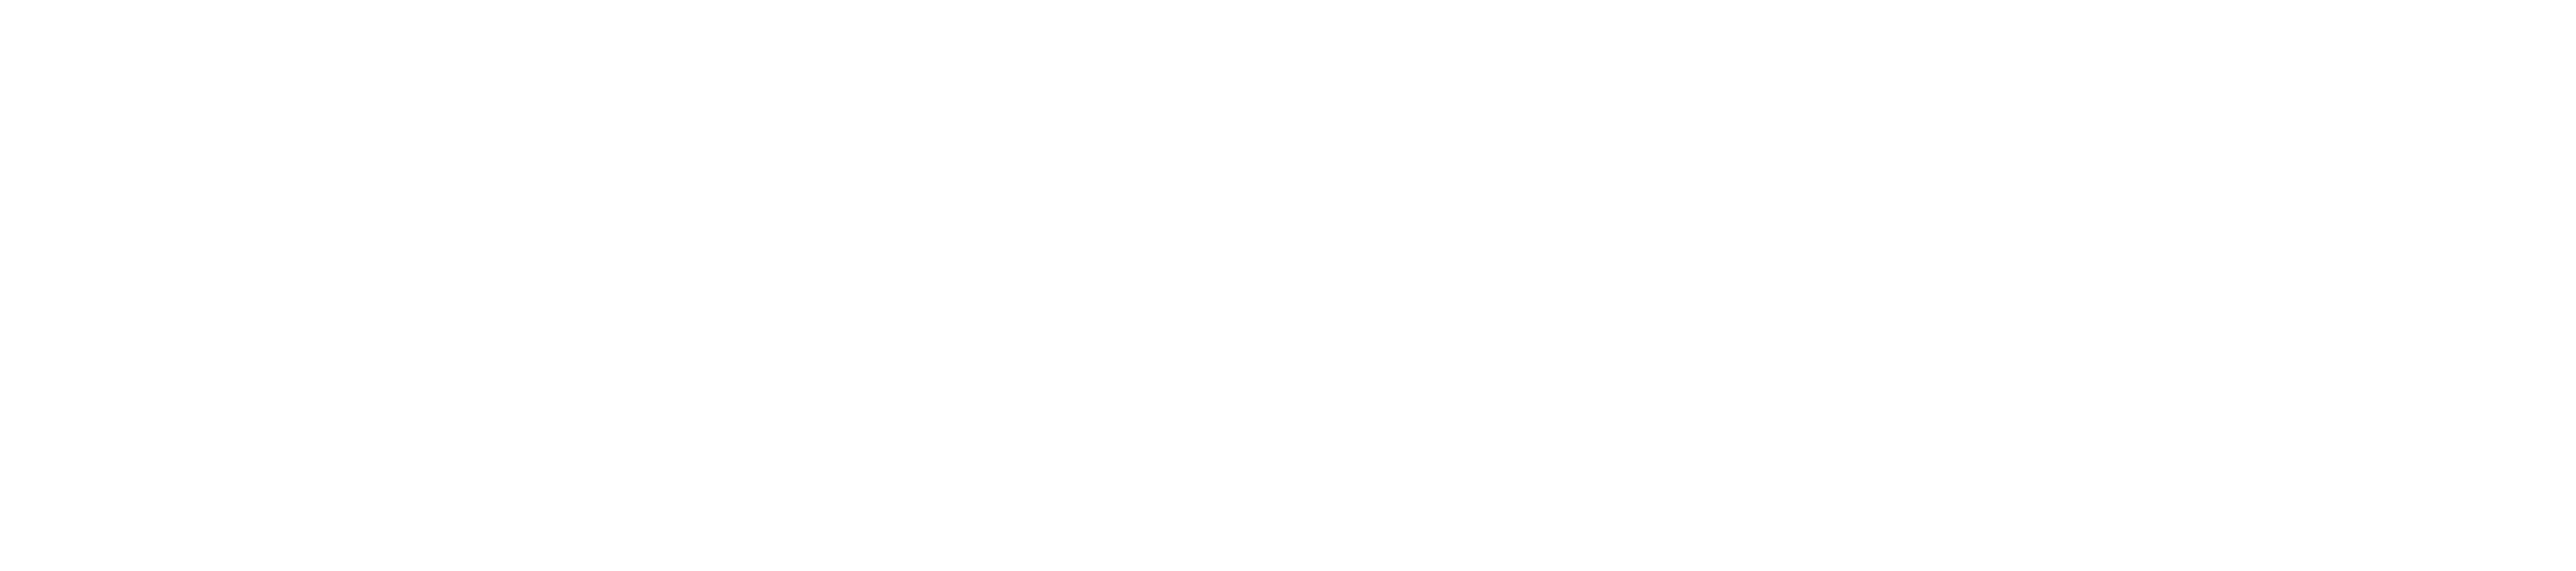 World Education, a division of JSI logo